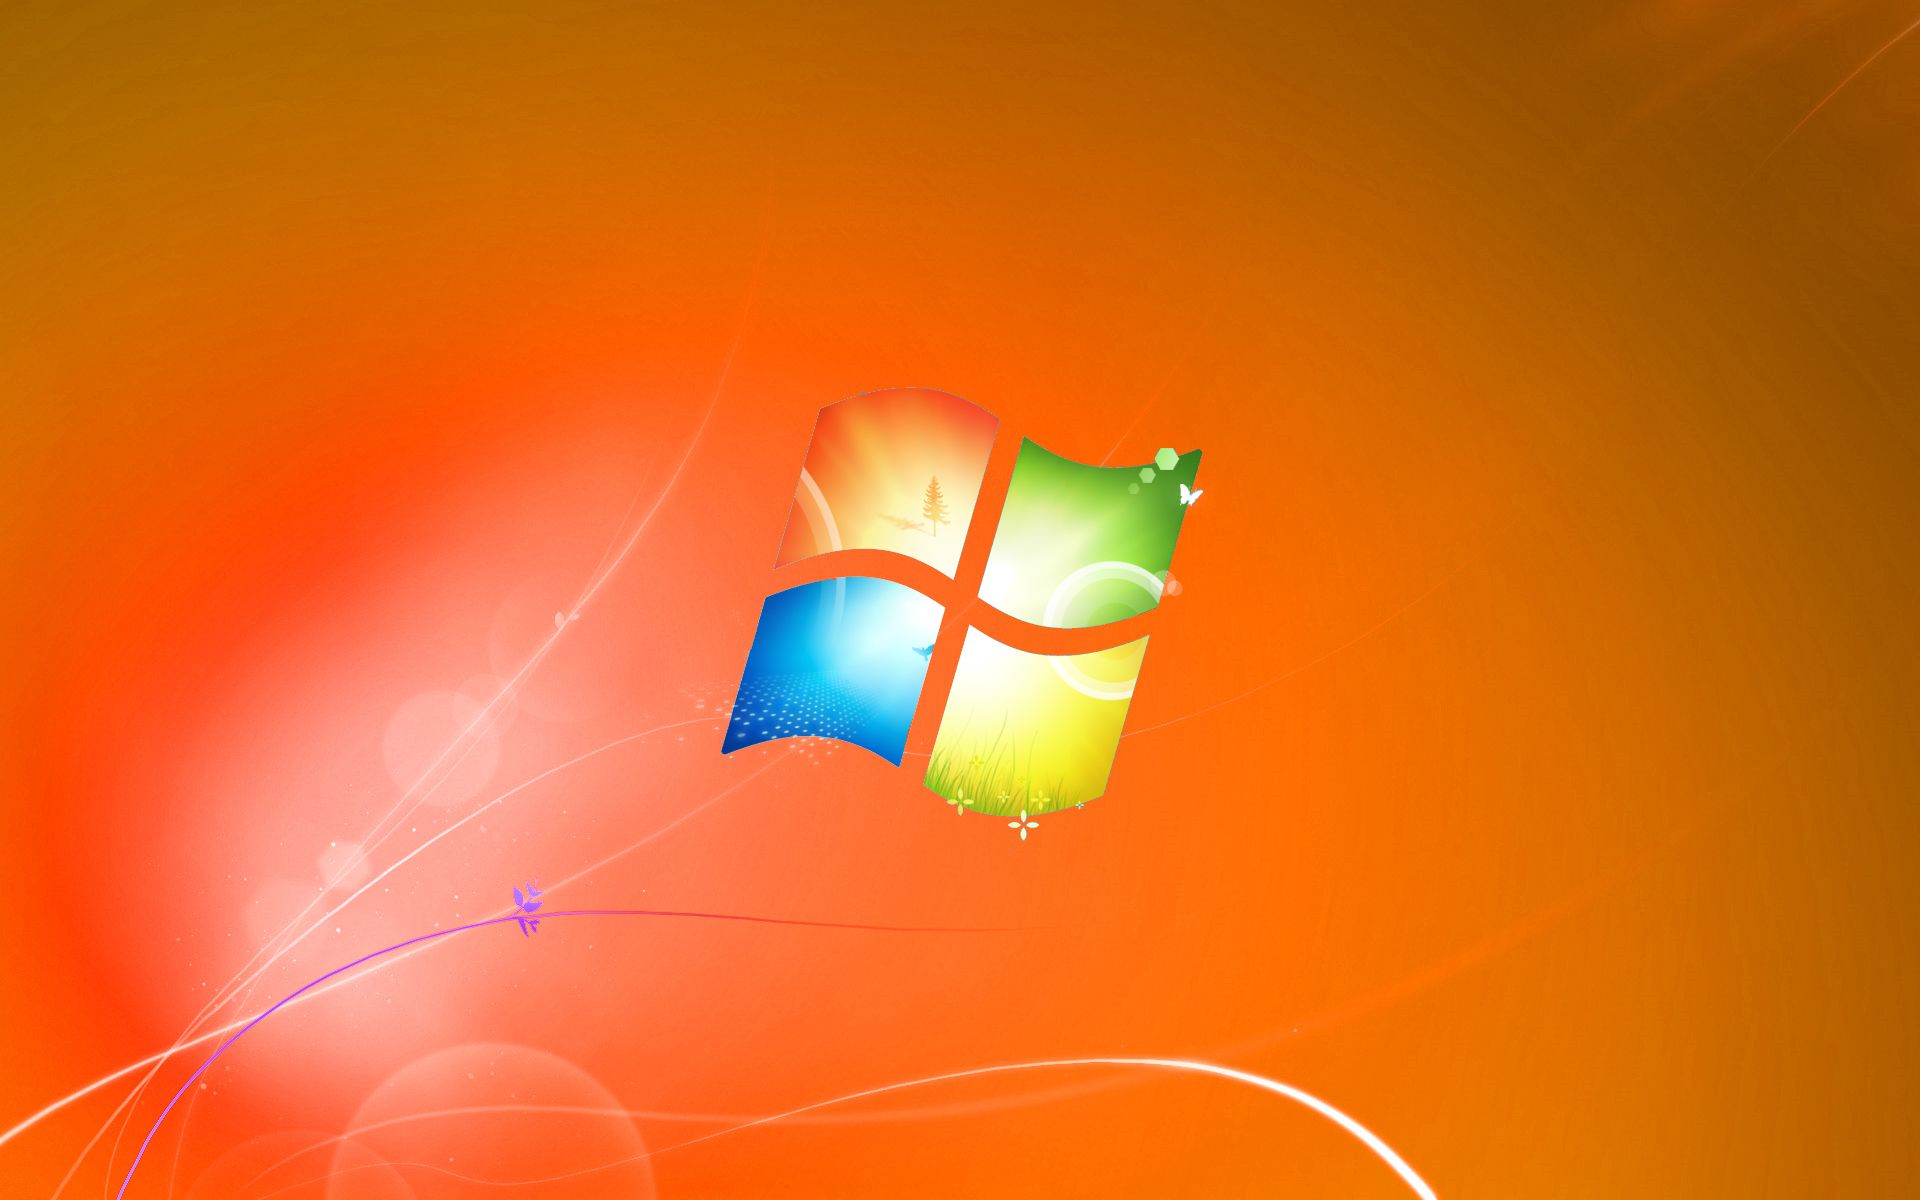 Windows 7 Default Wallpaper Pink Version by dominichulme on DeviantArt